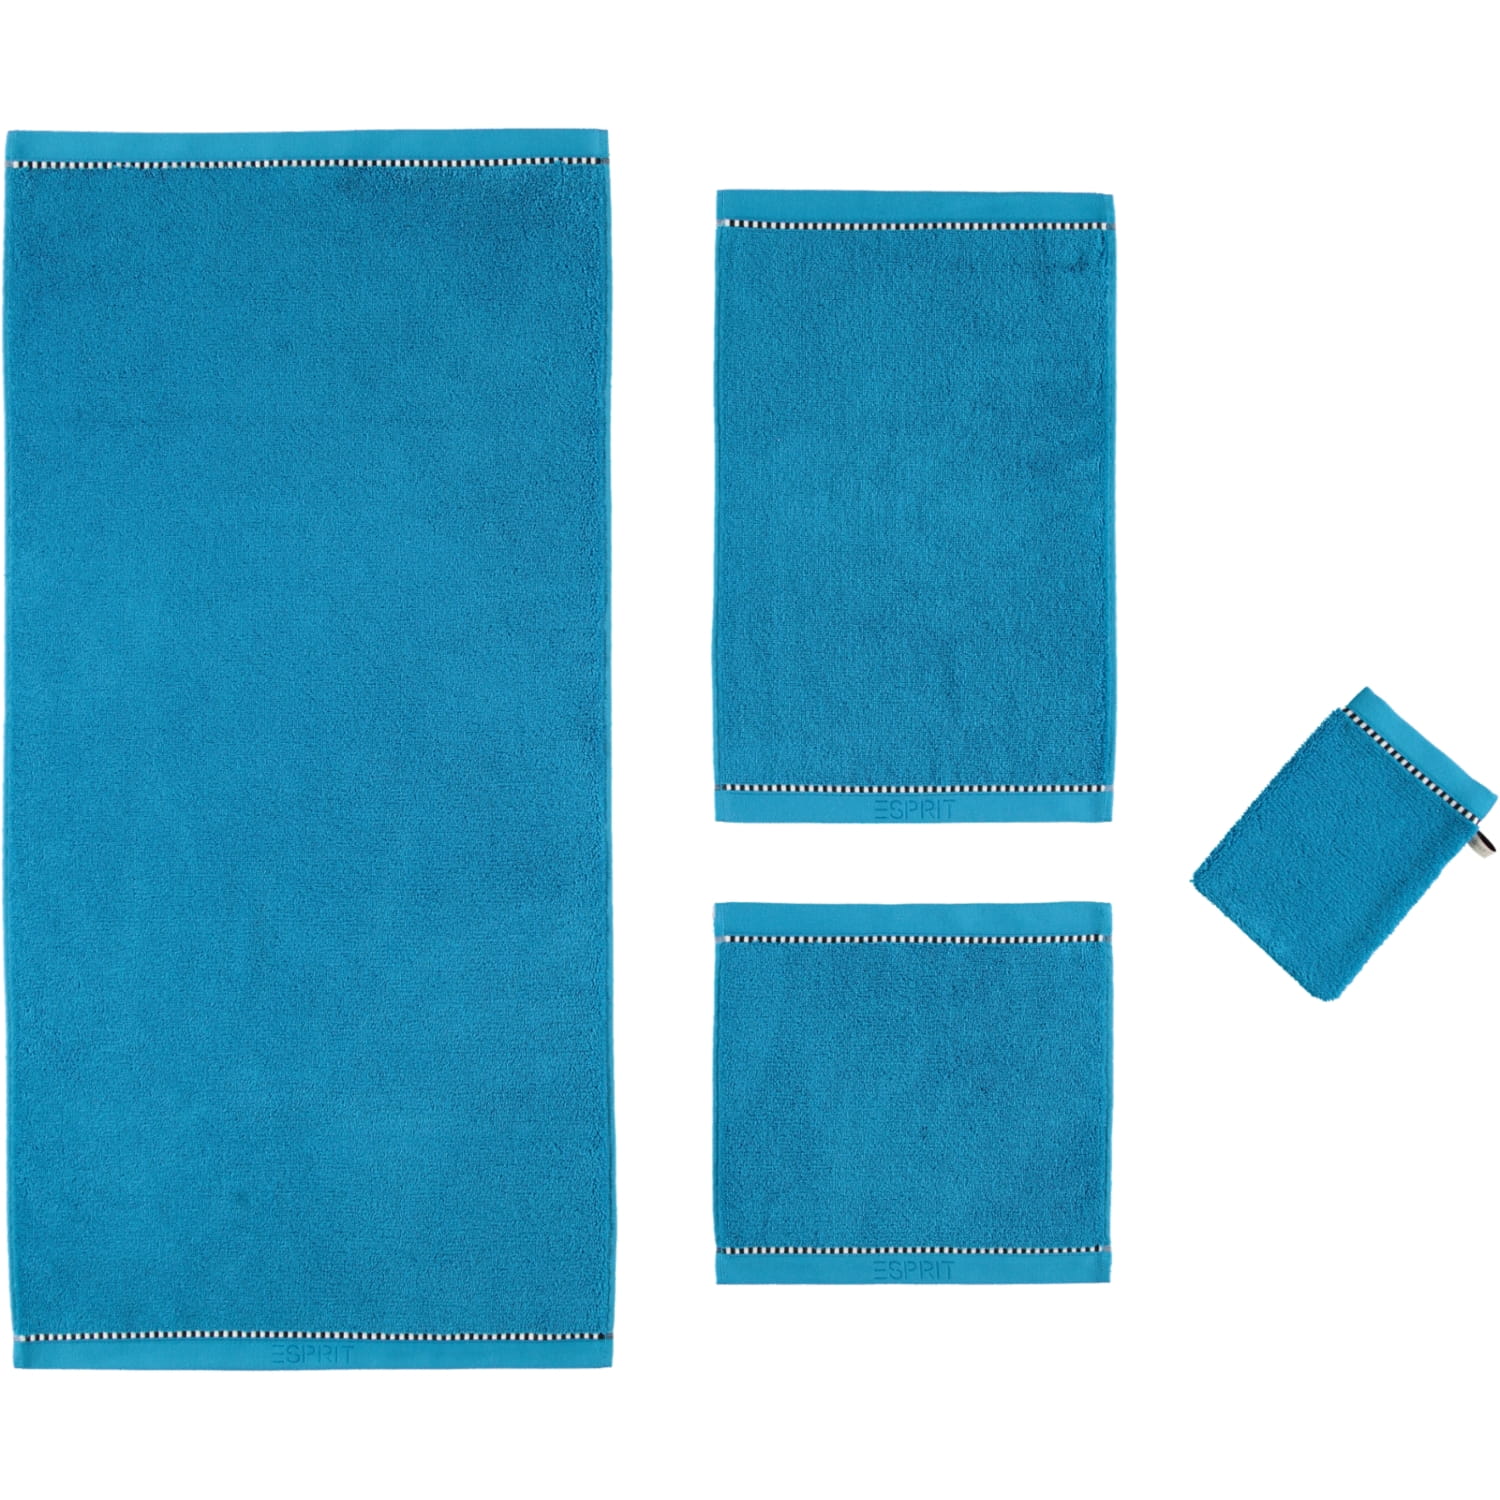 Esprit Box - | | - blue ESPRIT 4665 Marken ocean Solid Handtücher | ESPRIT Farbe